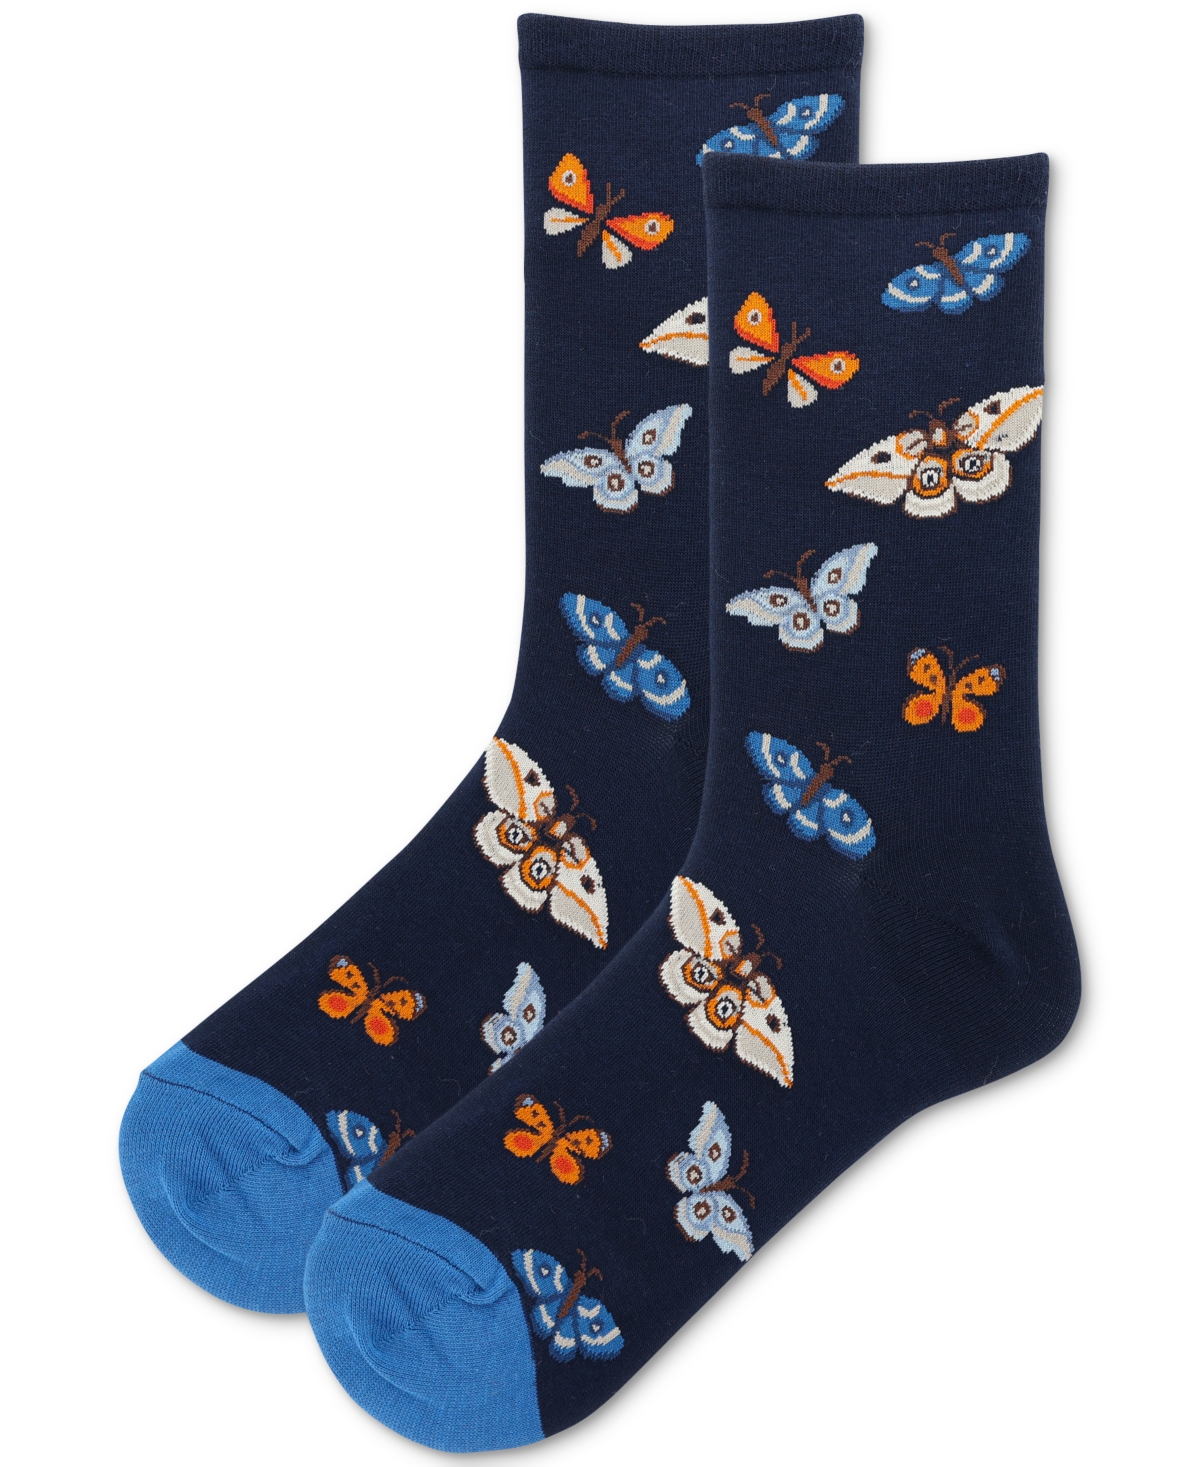 Women's Moth Printed Crew Socks - Navy